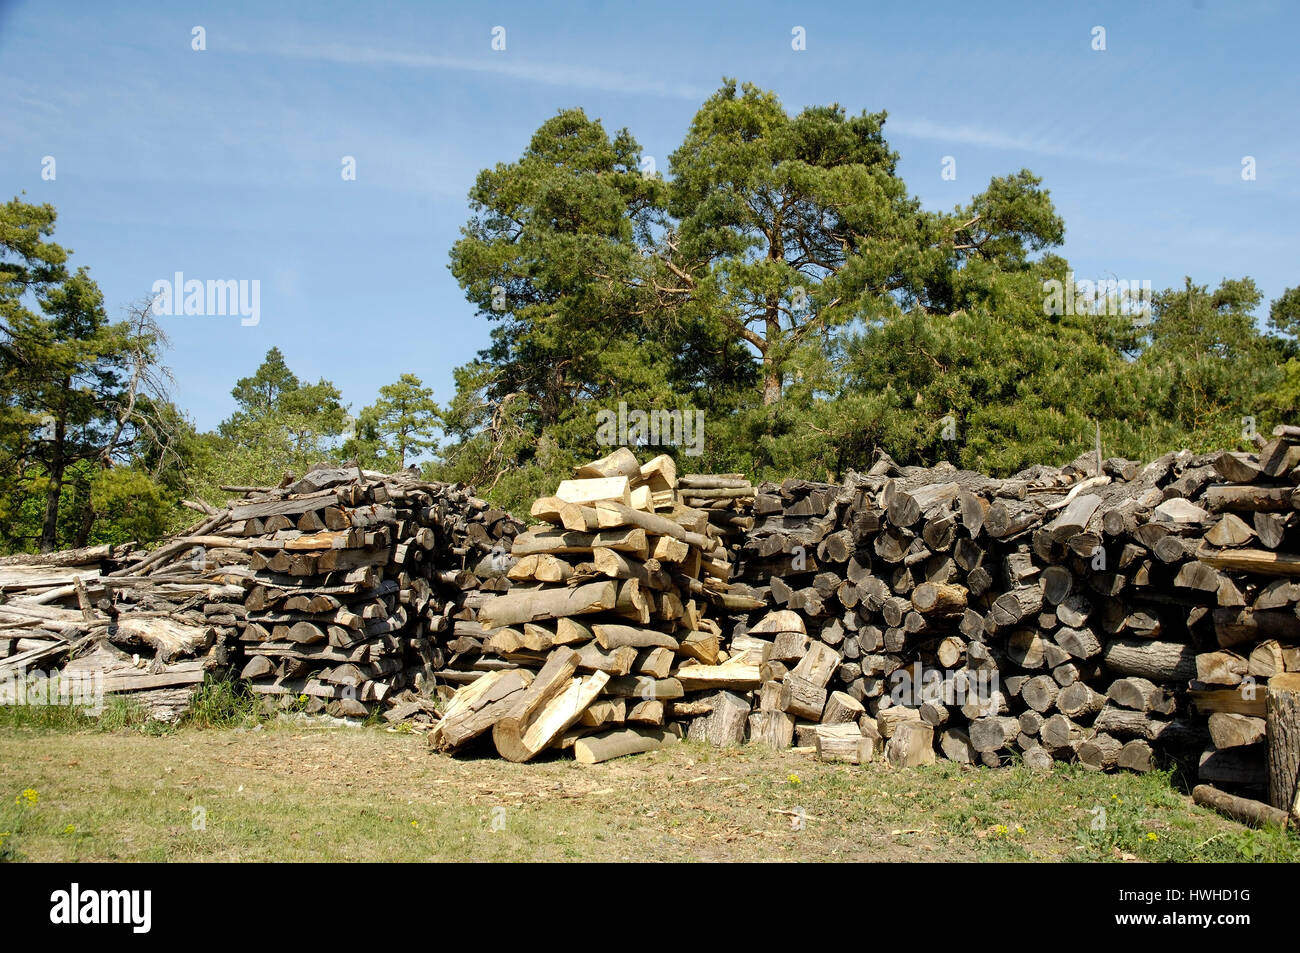 Resting place for firewood, wooden logs chimney wood, firewood, wood , Lagerplatz fuer Brennholz, Holzscheite / Kaminholz, Brennholz, Holz Stock Photo